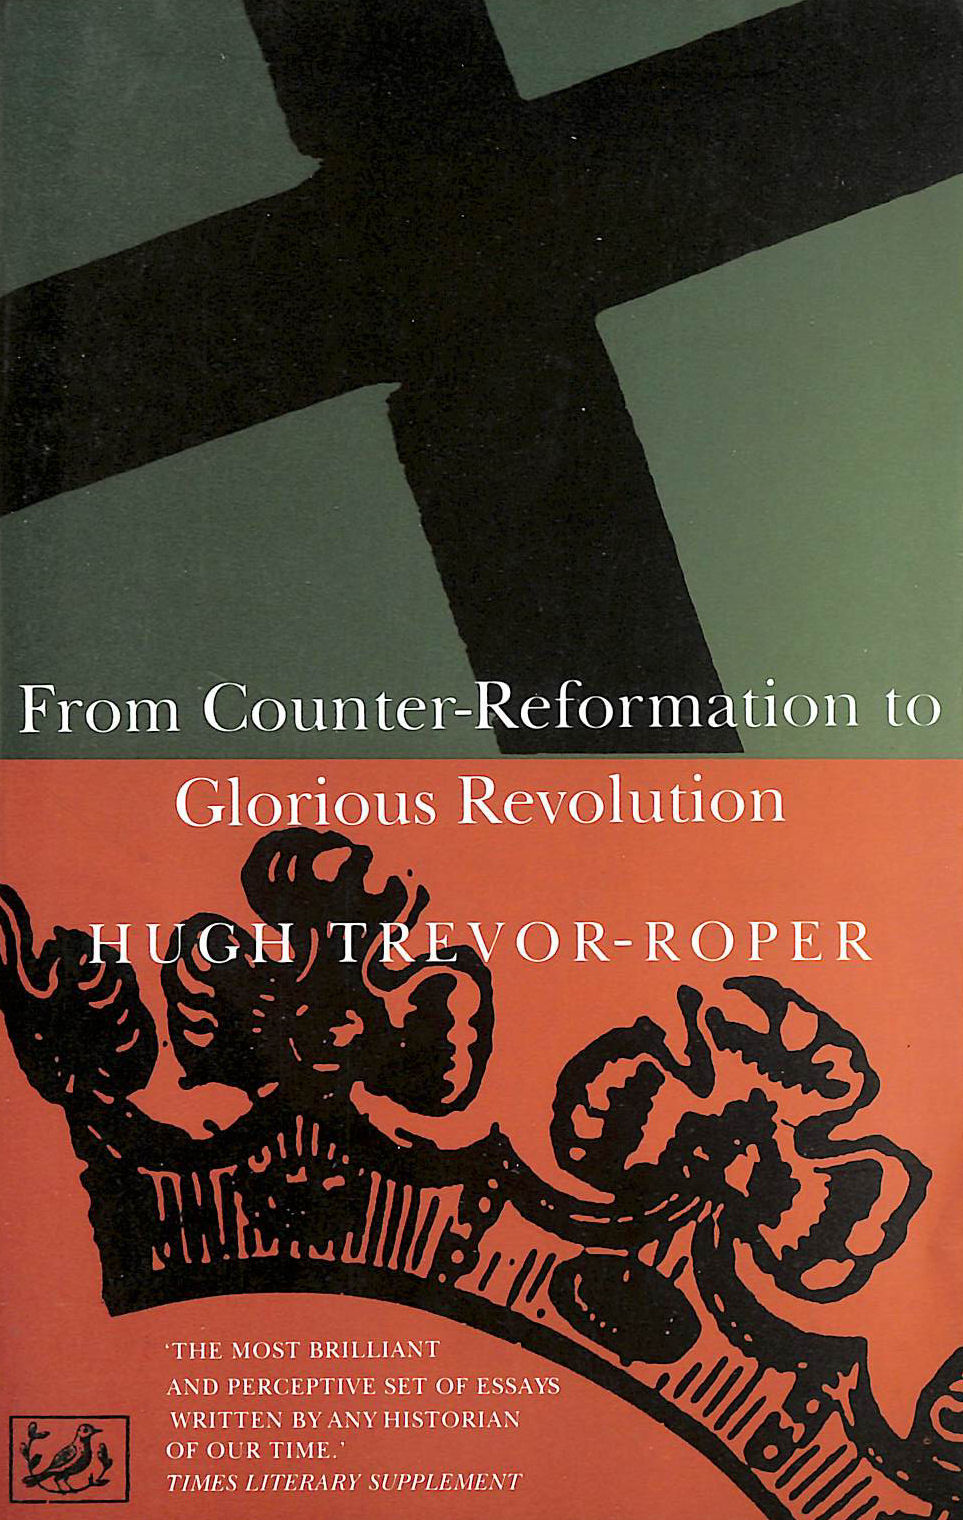 TREVOR-ROPER, HUGH - From Counter Reformation to Glorious Revolution